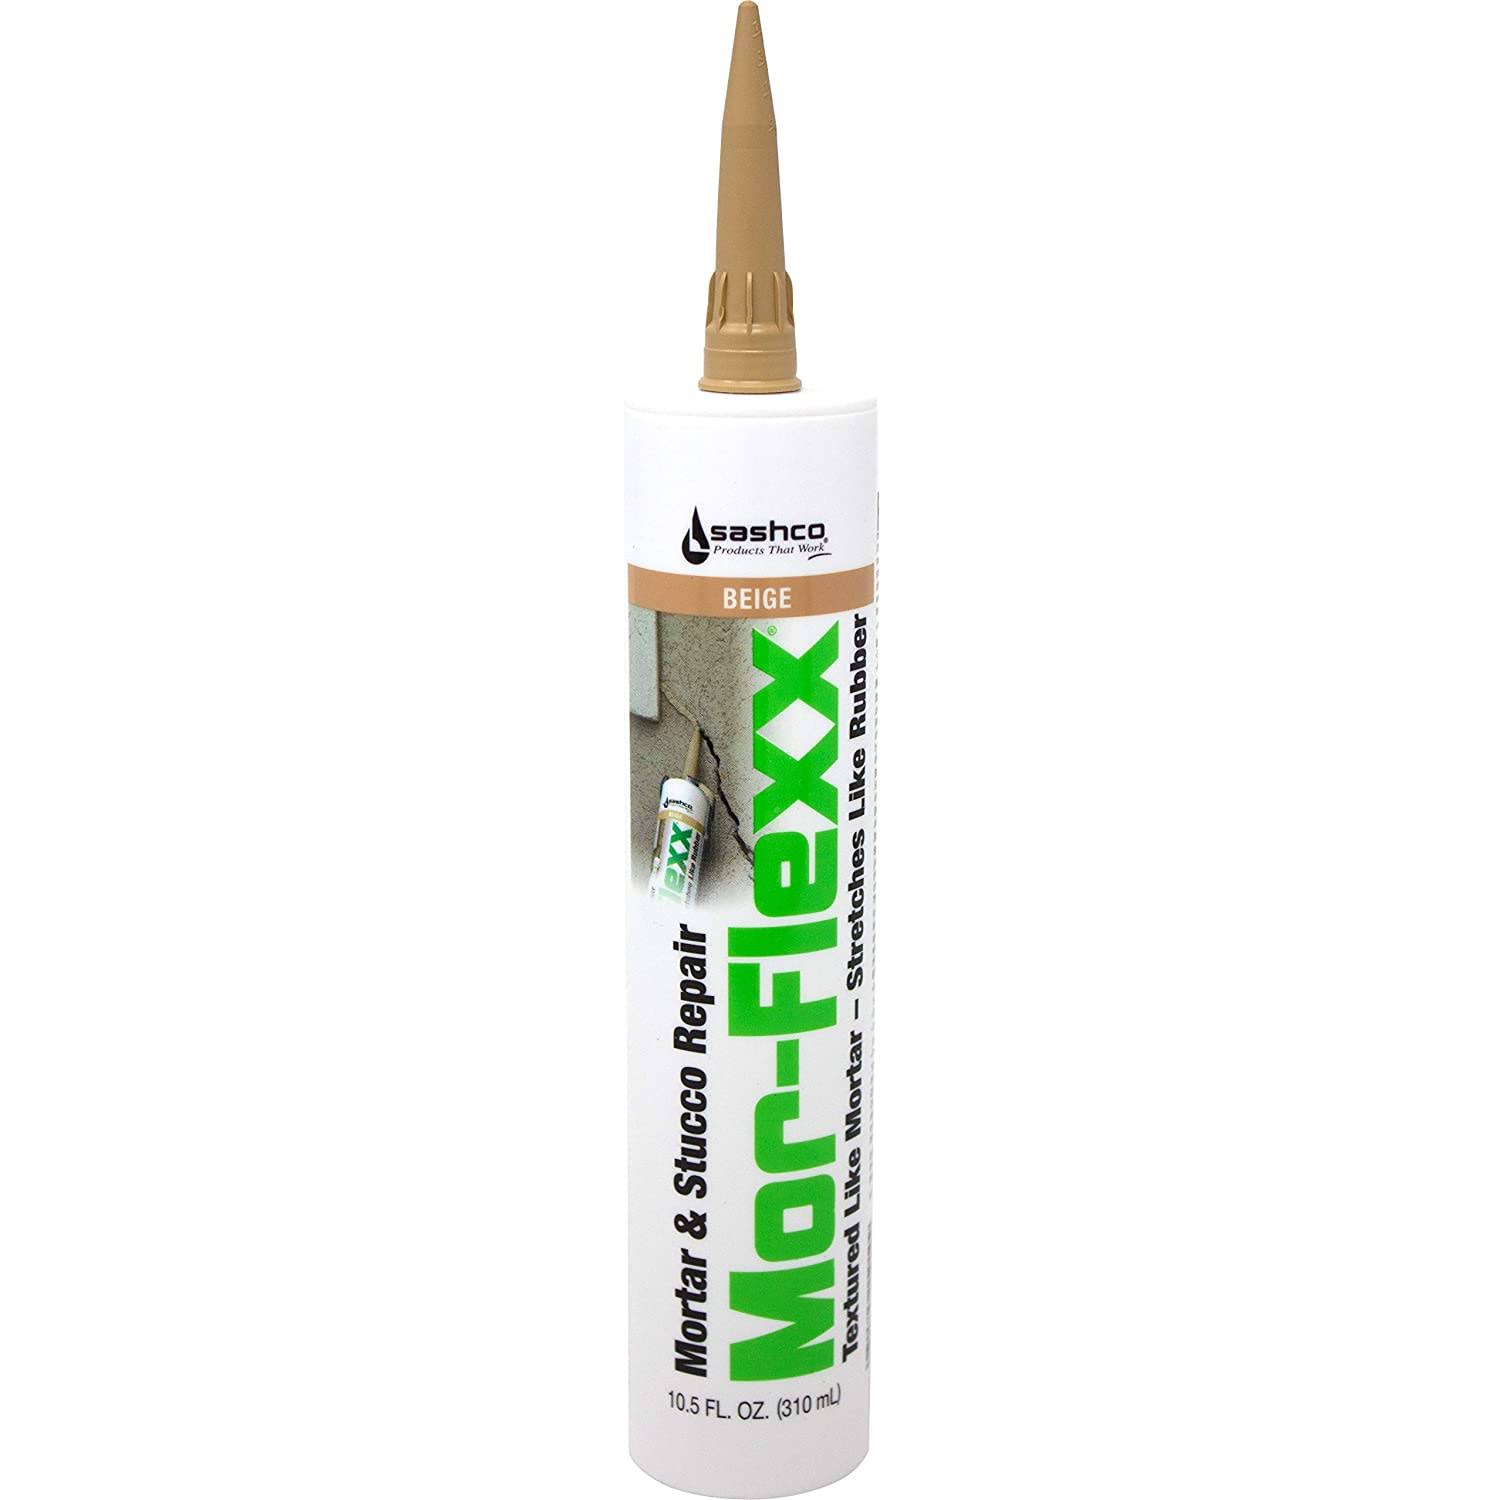 Sashco Beige MorFlexx Grout Repair Sealants - 10.5oz